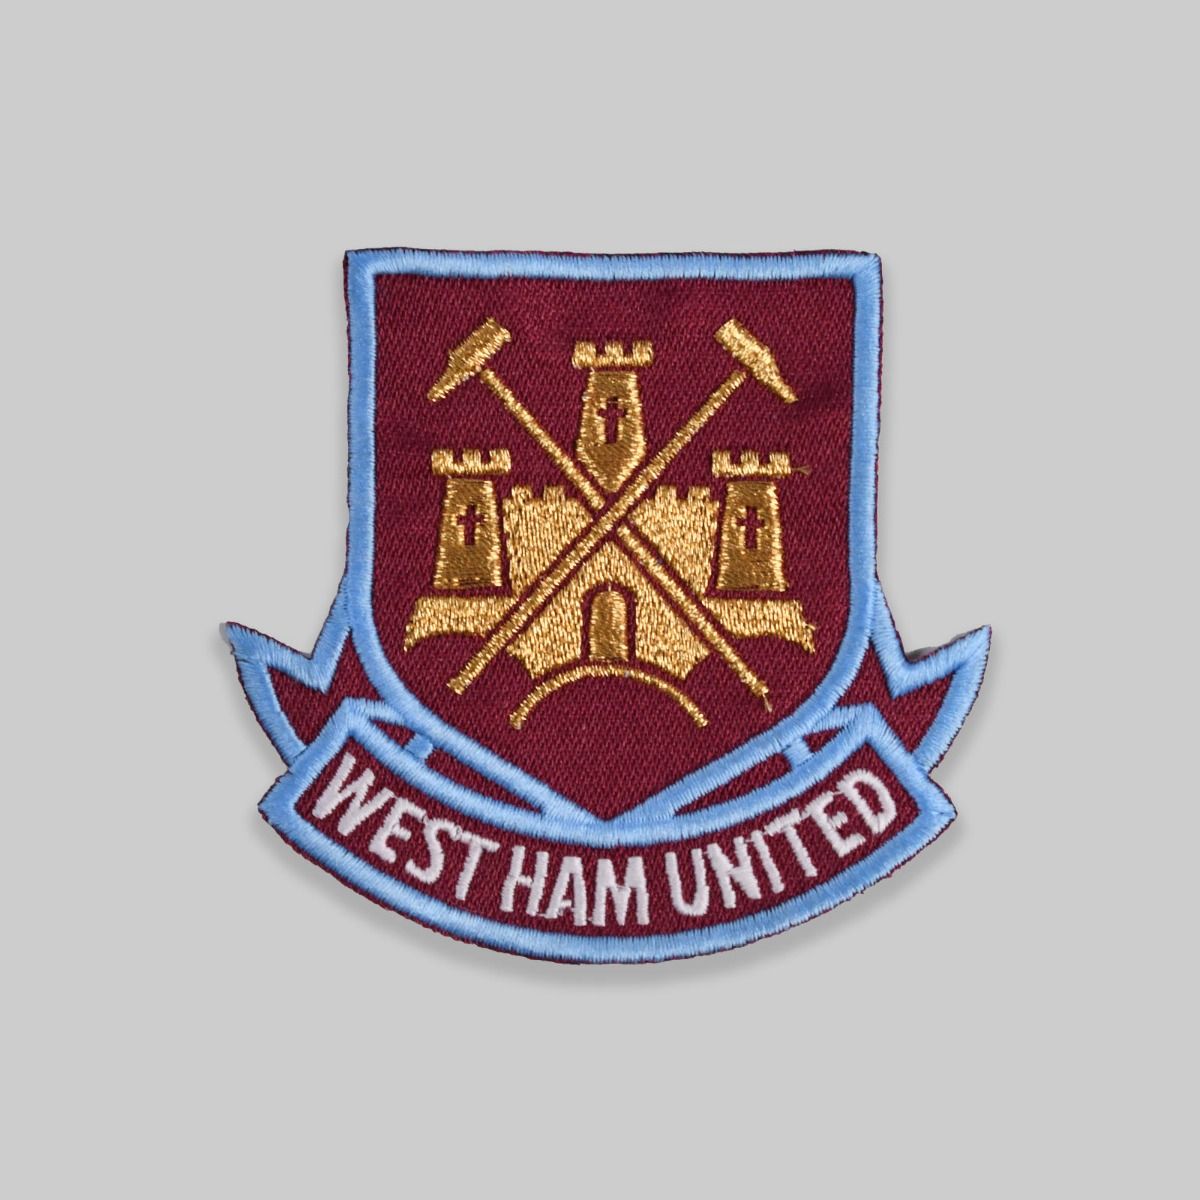 West Ham United Patch